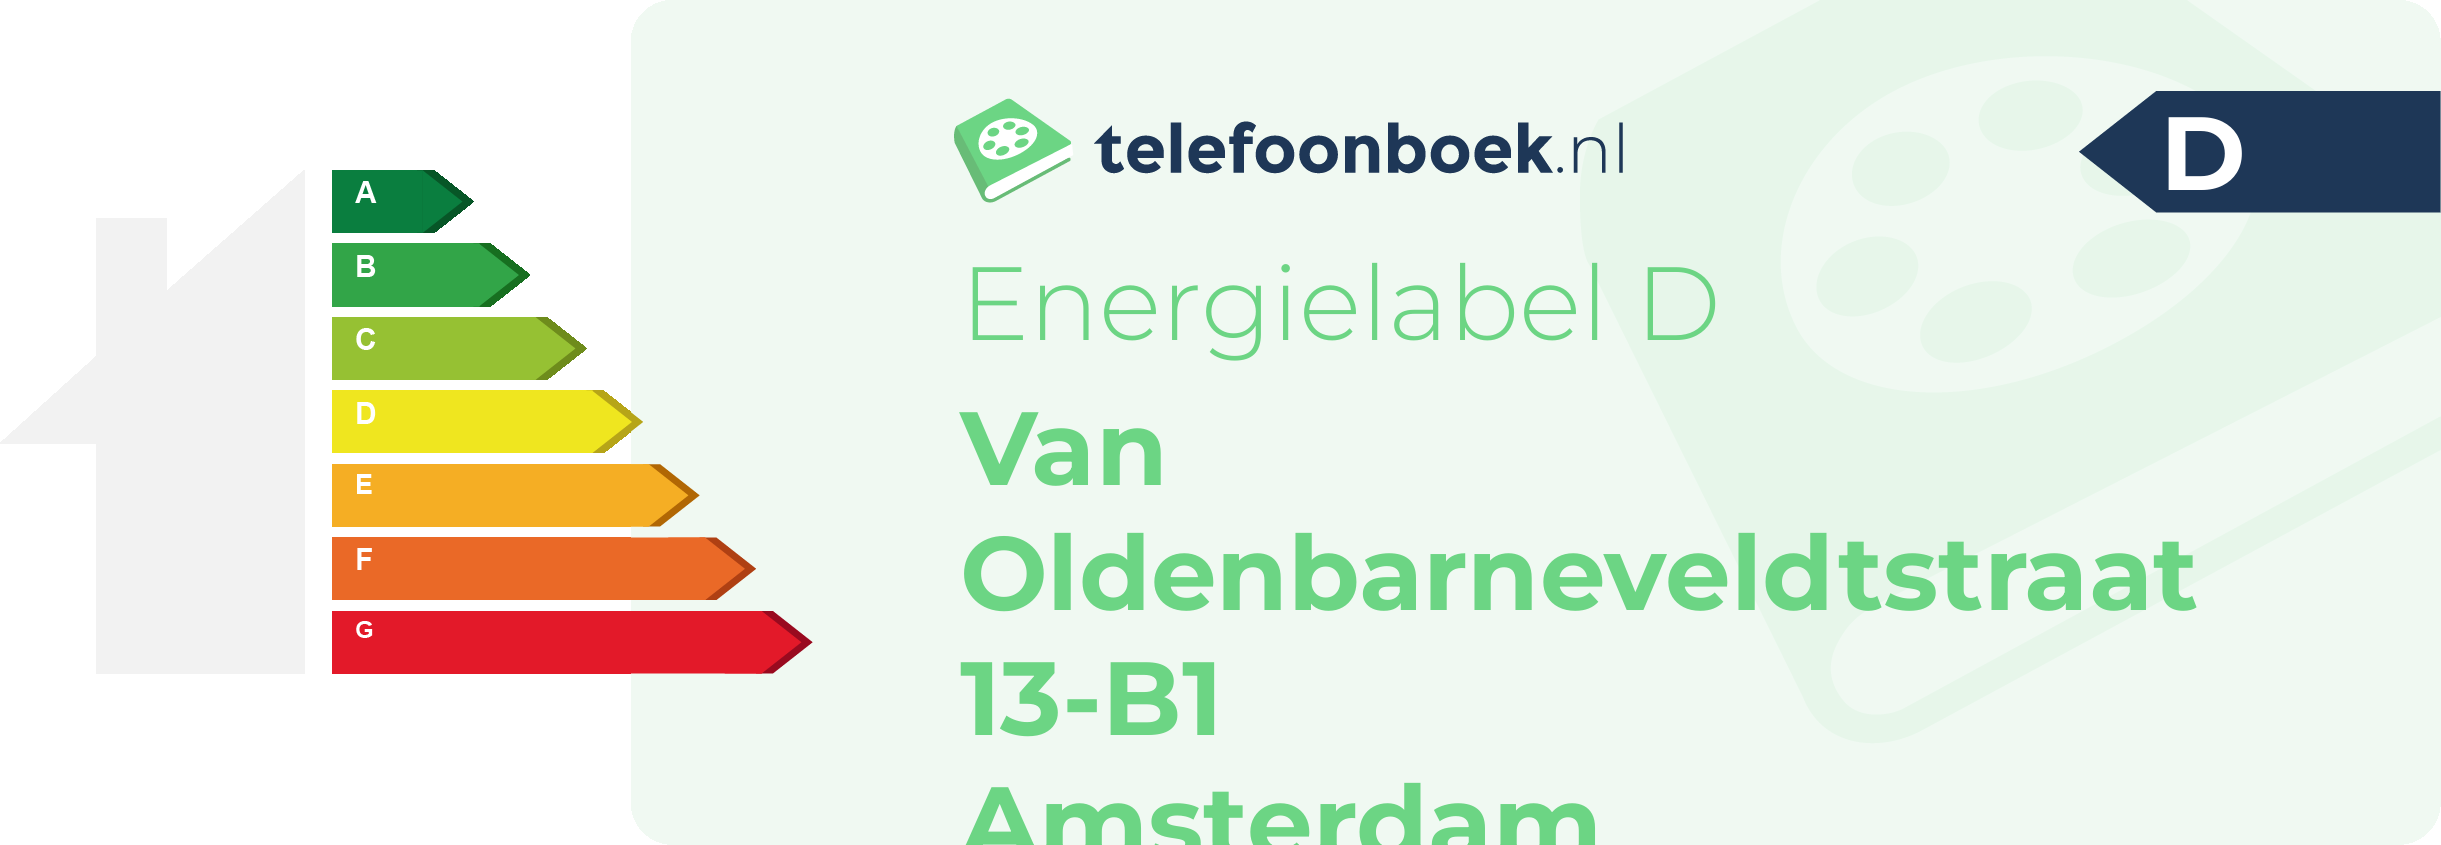 Energielabel Van Oldenbarneveldtstraat 13-B1 Amsterdam